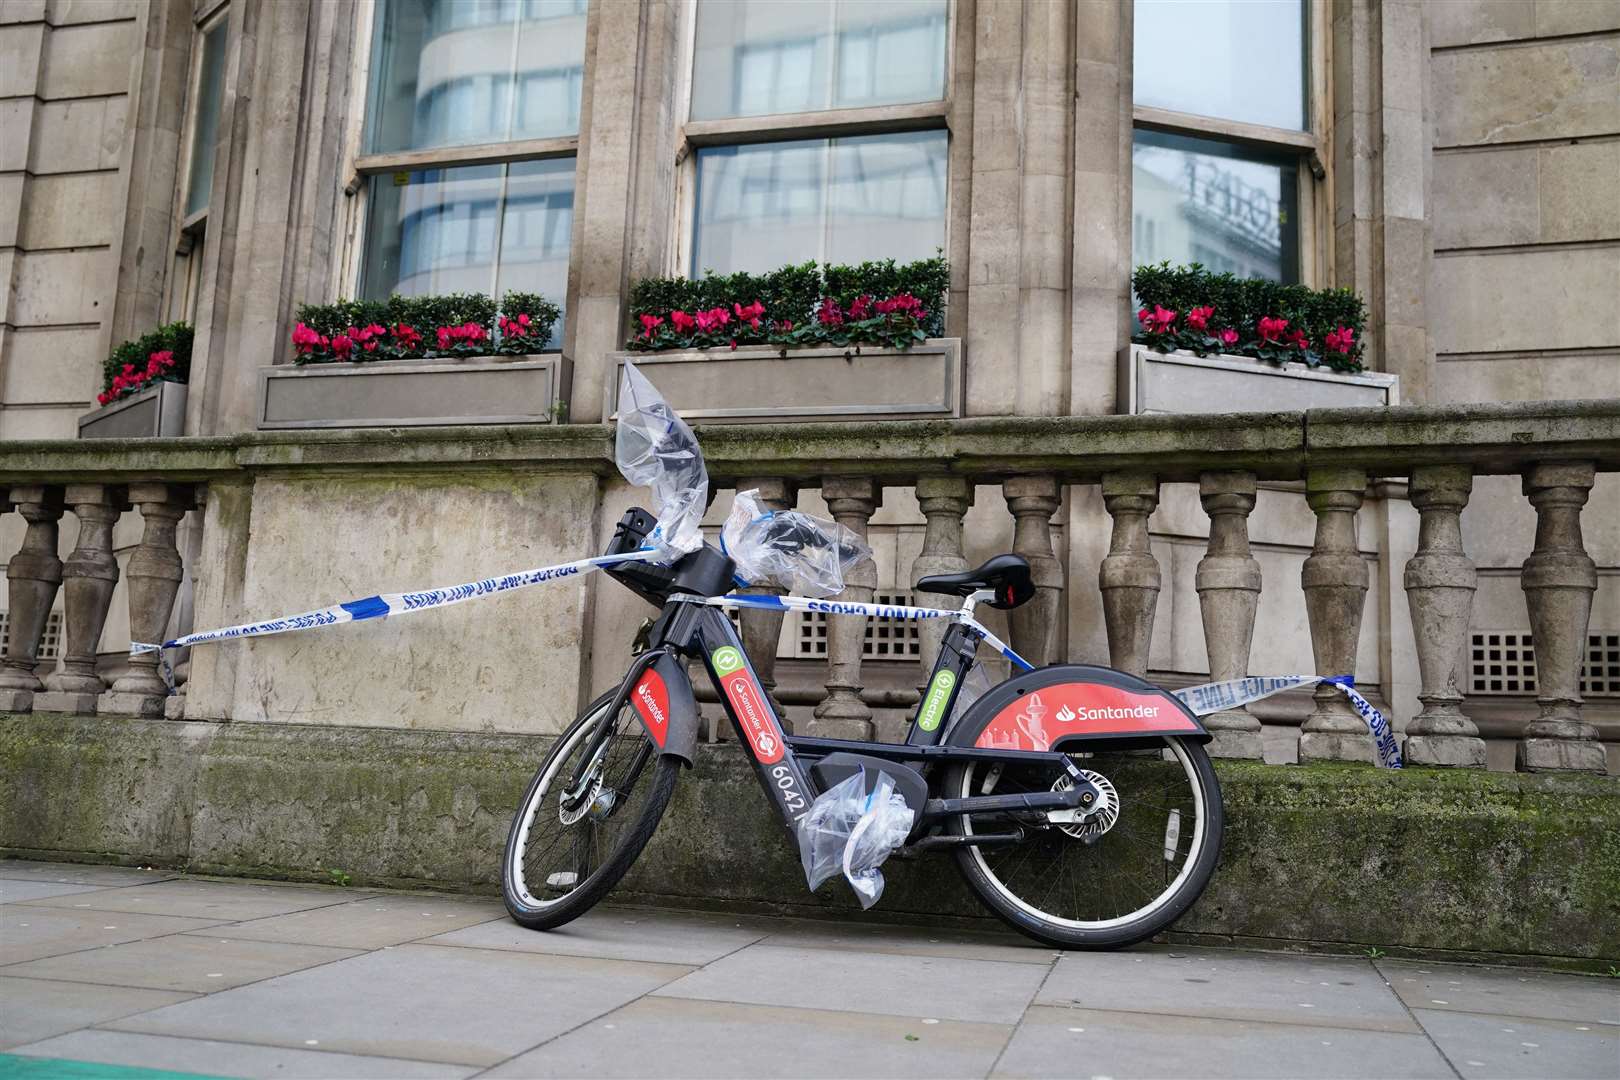 A Santander rental bike, with bags protecting potential evidence, on the road near the scene (Jordan Pettitt/PA)